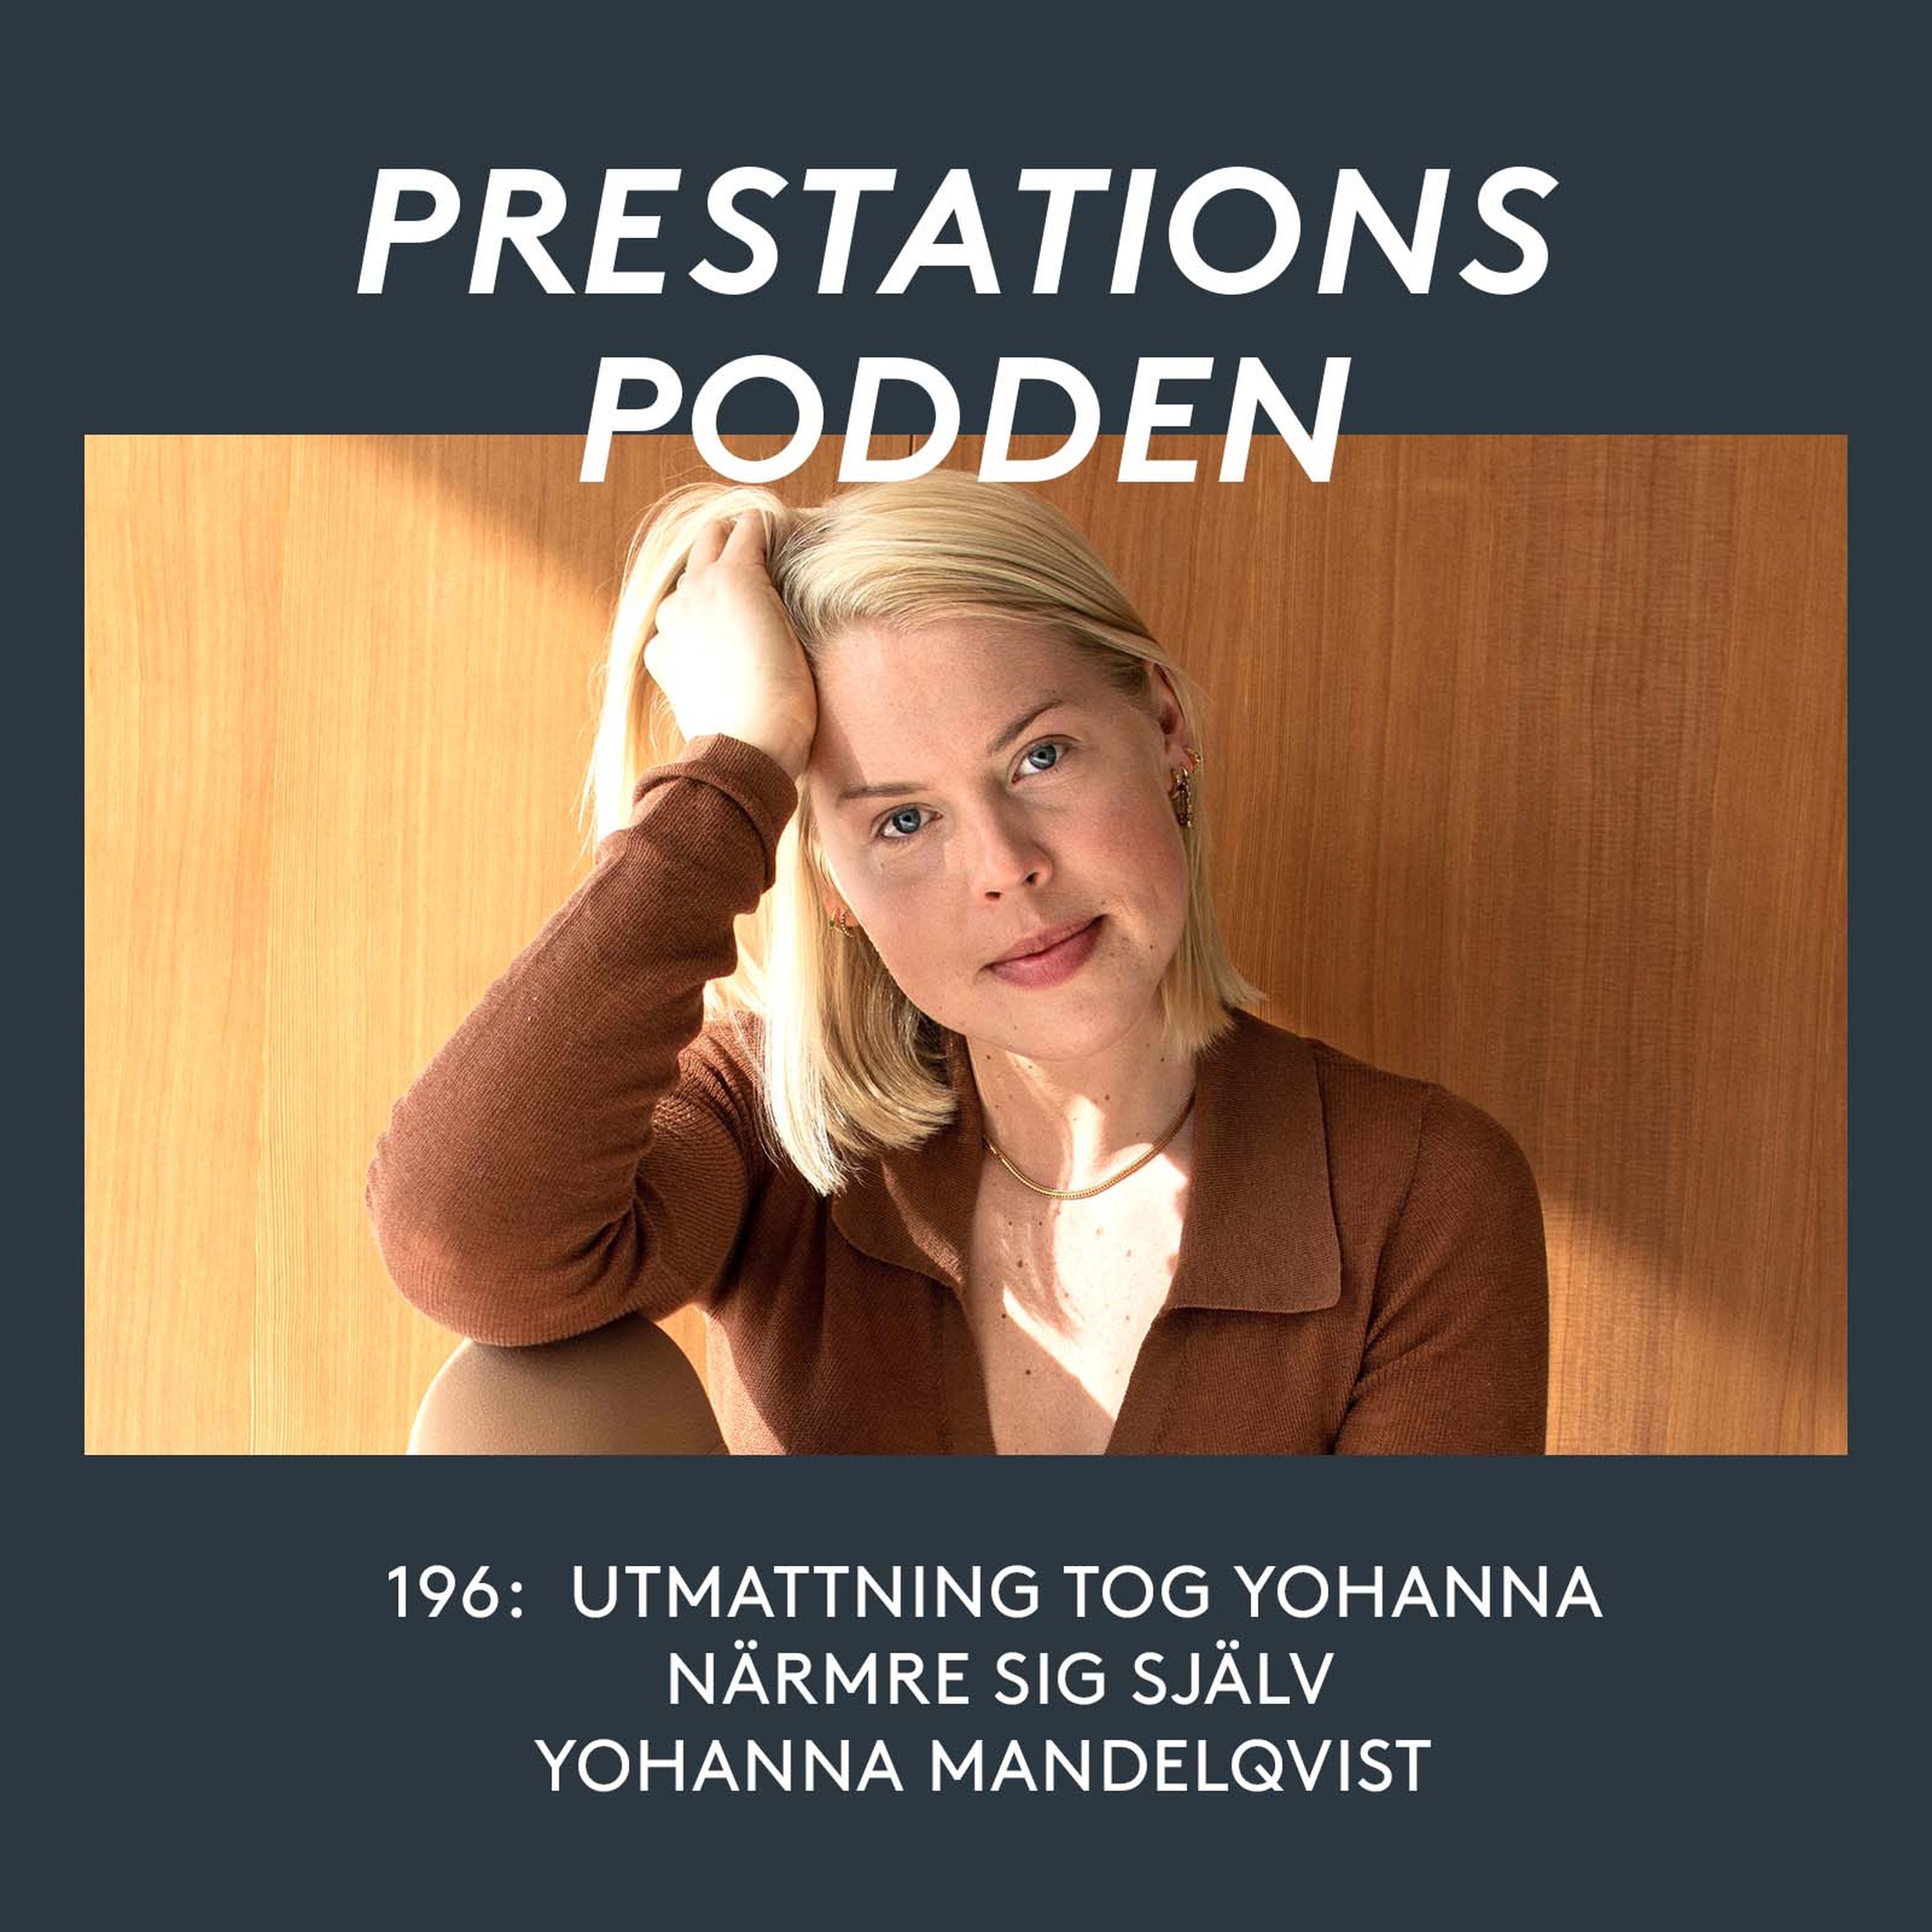 Utmattning tog Yohanna närmare sig själv - Yohanna Mannelqvist